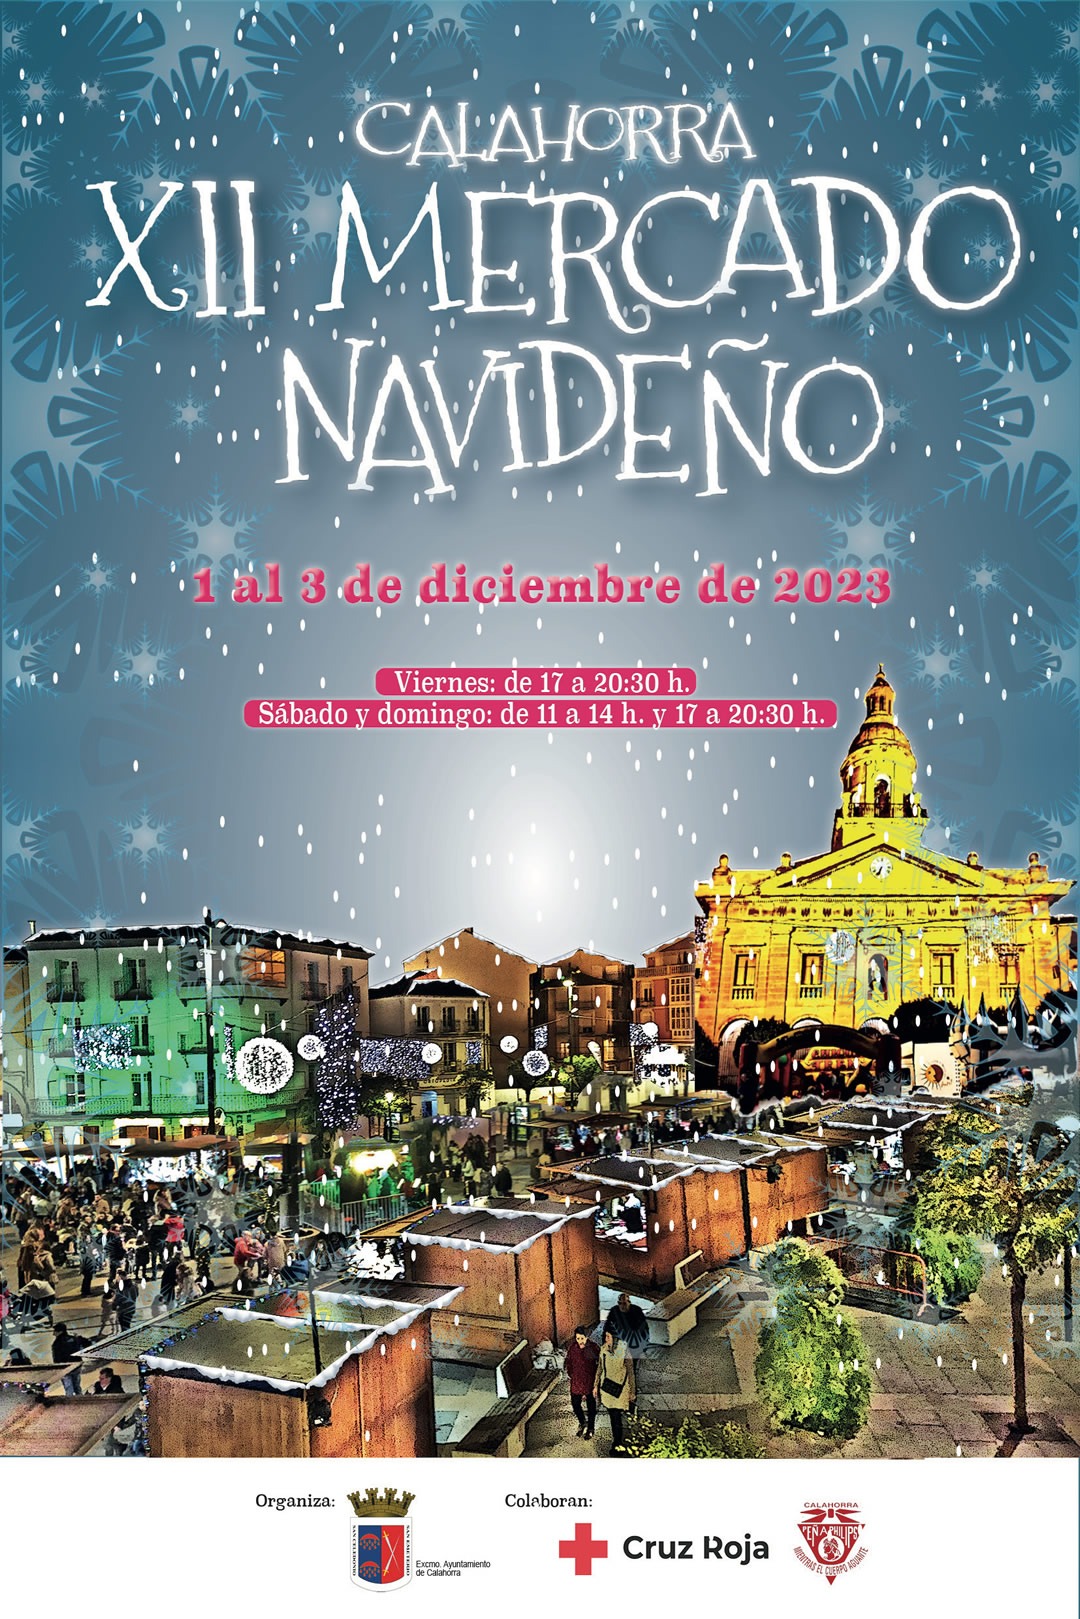 XII Mercado navideño de Calahorra , La Rioja 01 al 03 de diciembre del 2023